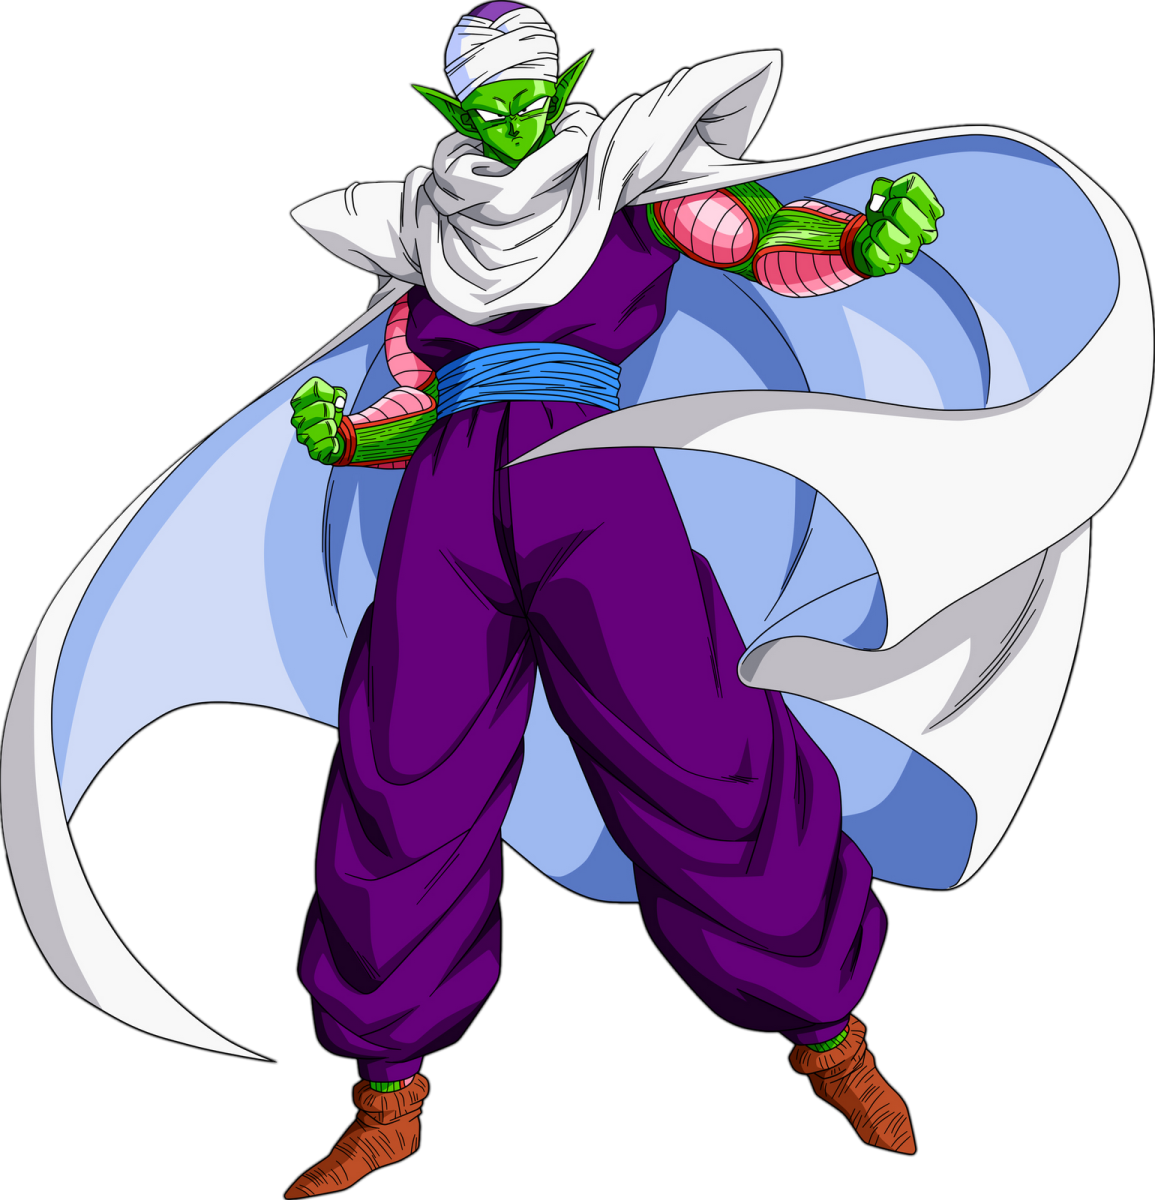 Piccolo | Dragon Ball Power Levels Wiki | FANDOM powered by Wikia